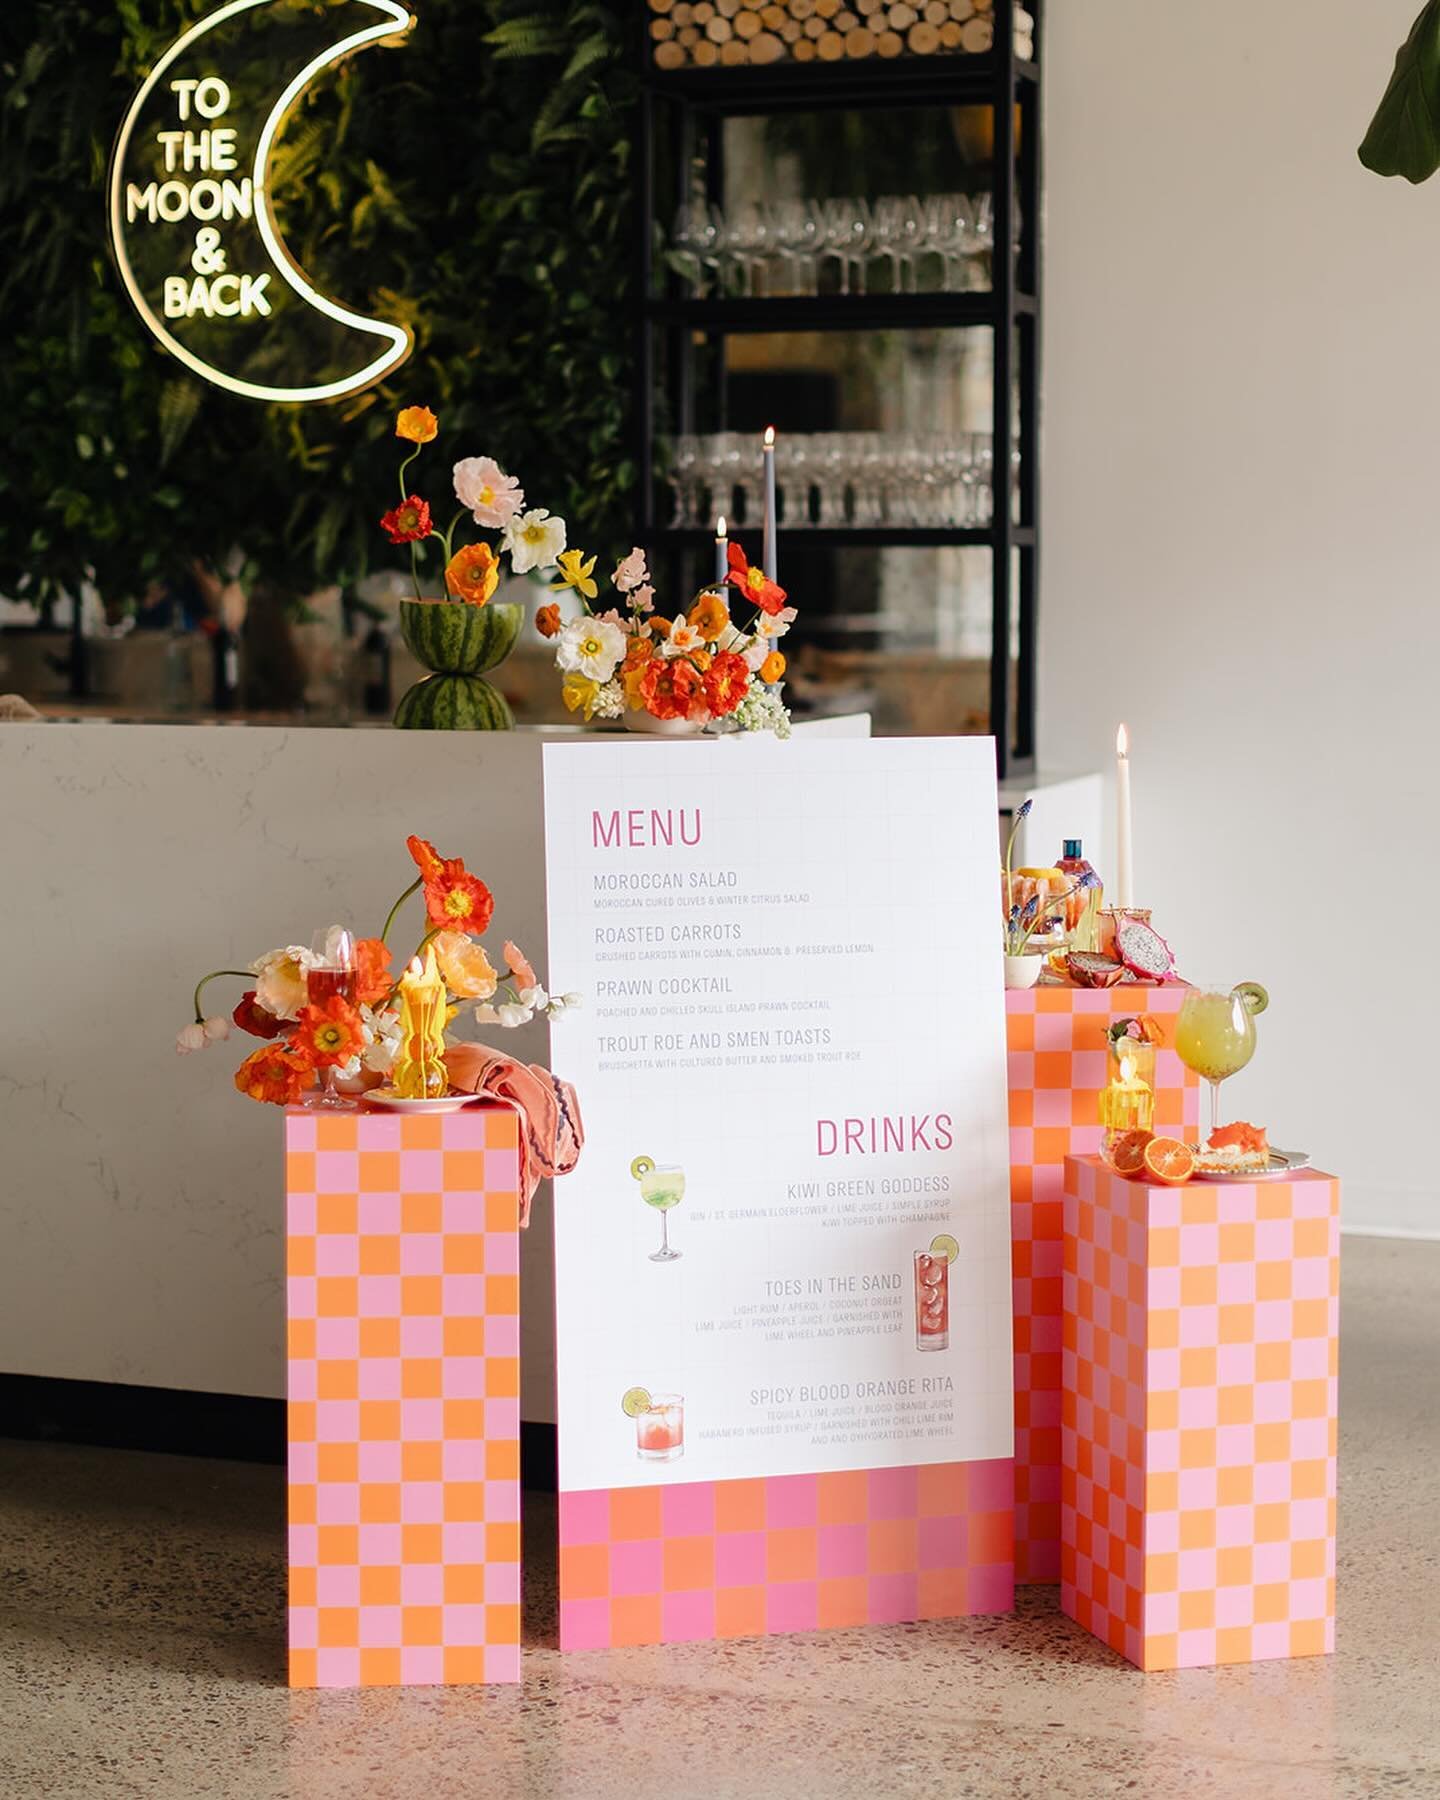 Fun, flirty, bright and juicy. So refreshing!

Creative Team:
Planning and Design -&nbsp;@empiriastudios
Floral -&nbsp;@cosmos.floral
Photo -&nbsp;@adriansteinphoto
Food -&nbsp;@parisdiningclub
Cake -&nbsp;@ink_sweets
Venue -&nbsp;@urbandaisyevents
S